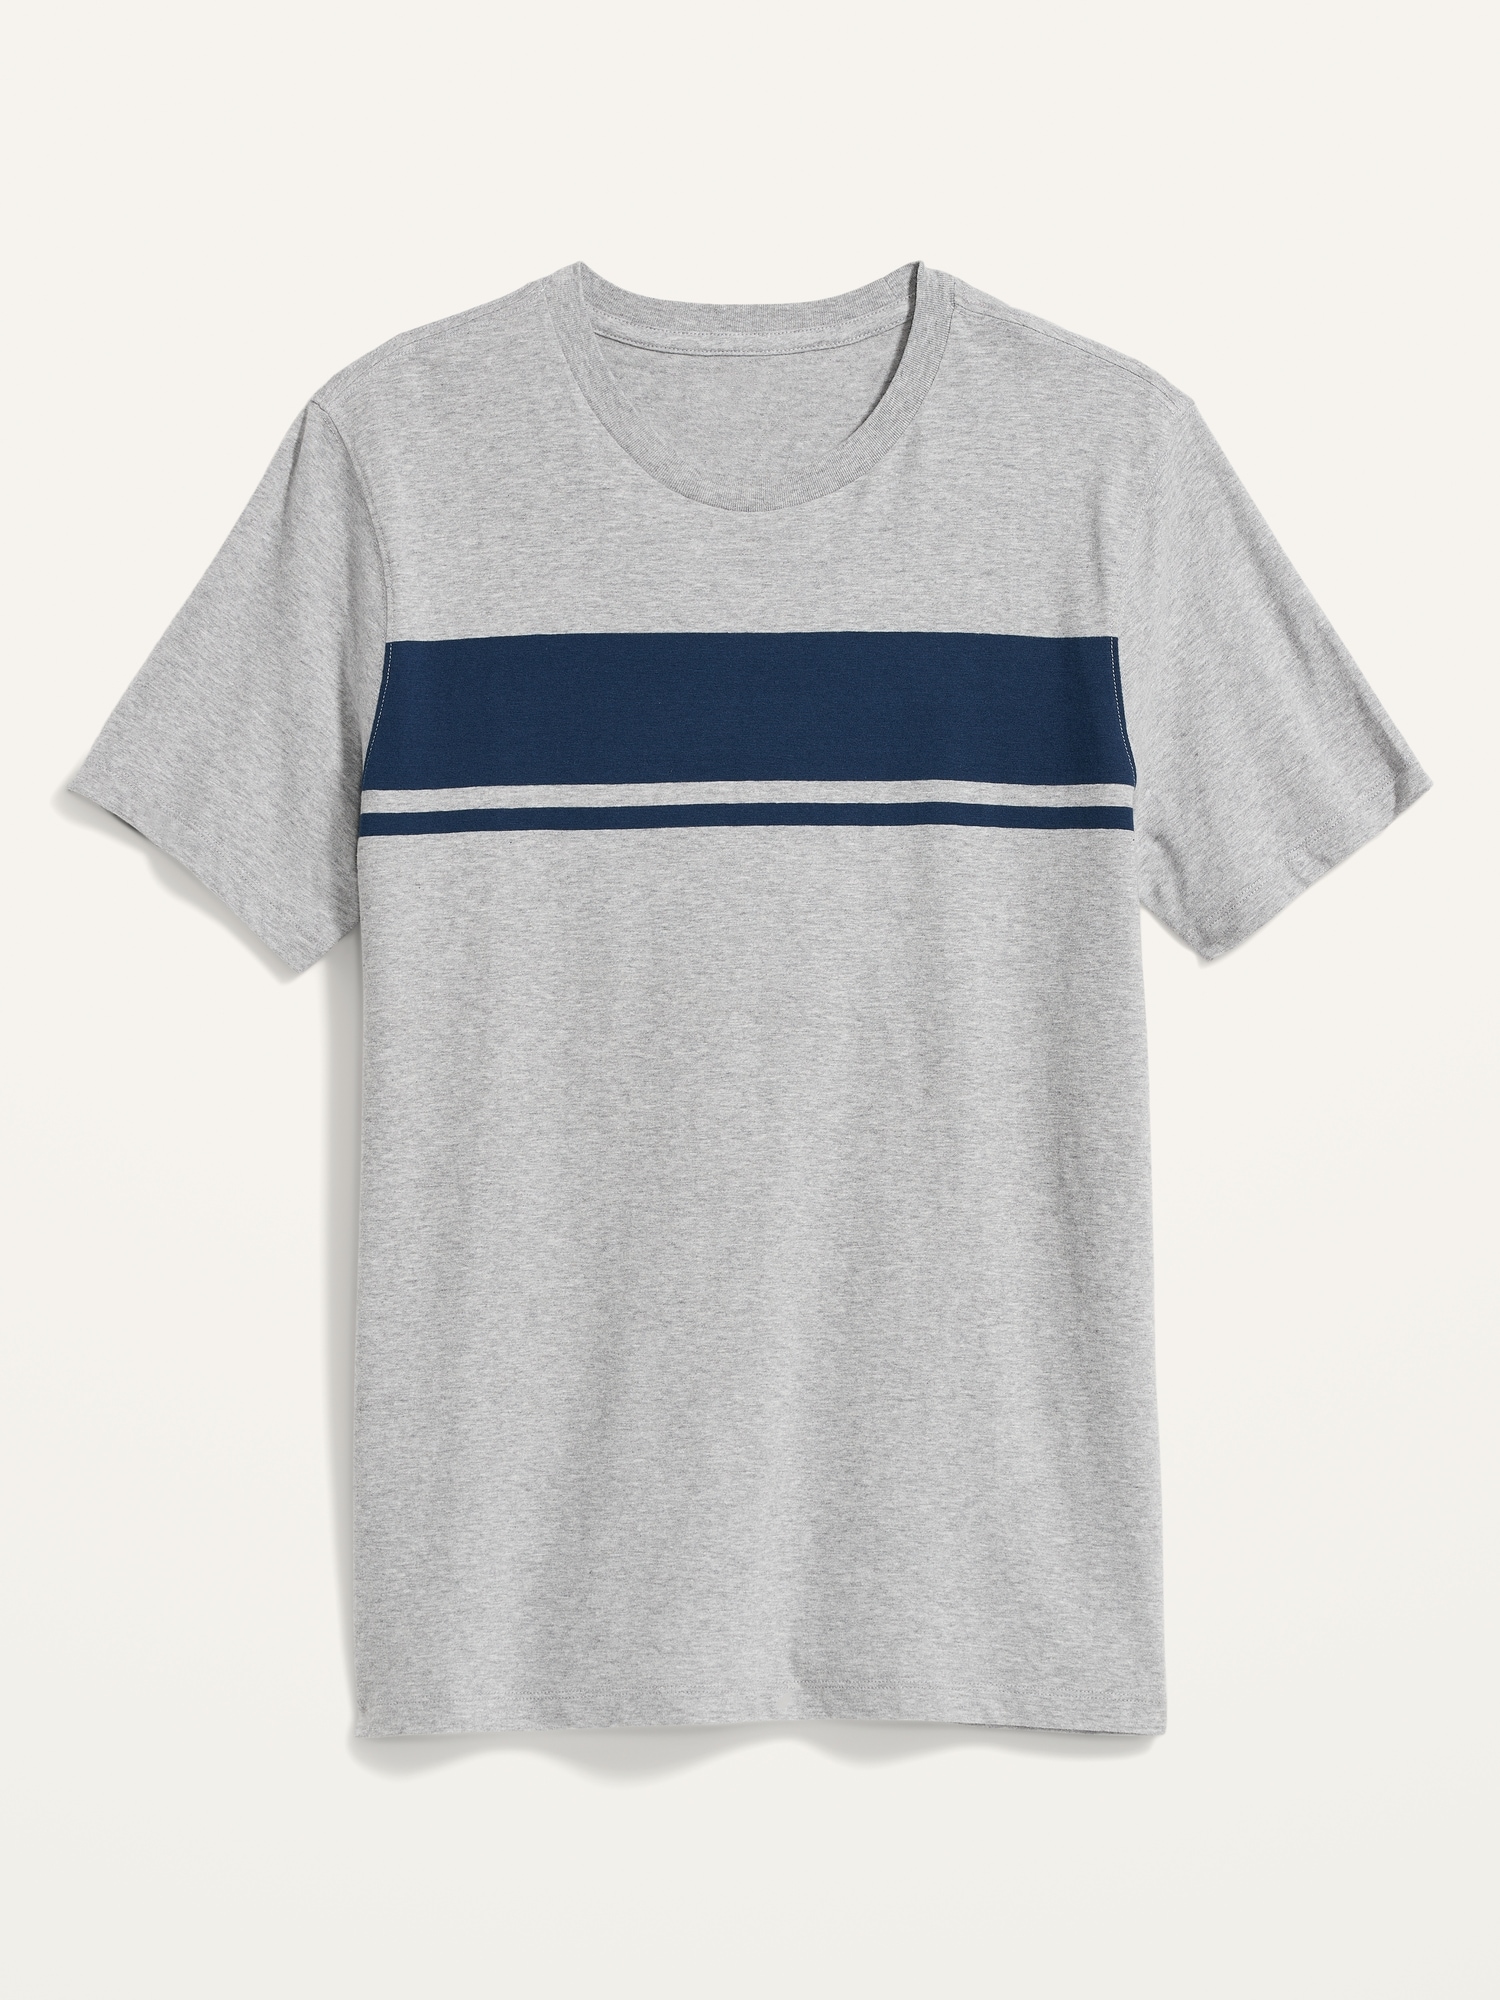 Soft-Washed Center-Stripe T-Shirt | Old Navy